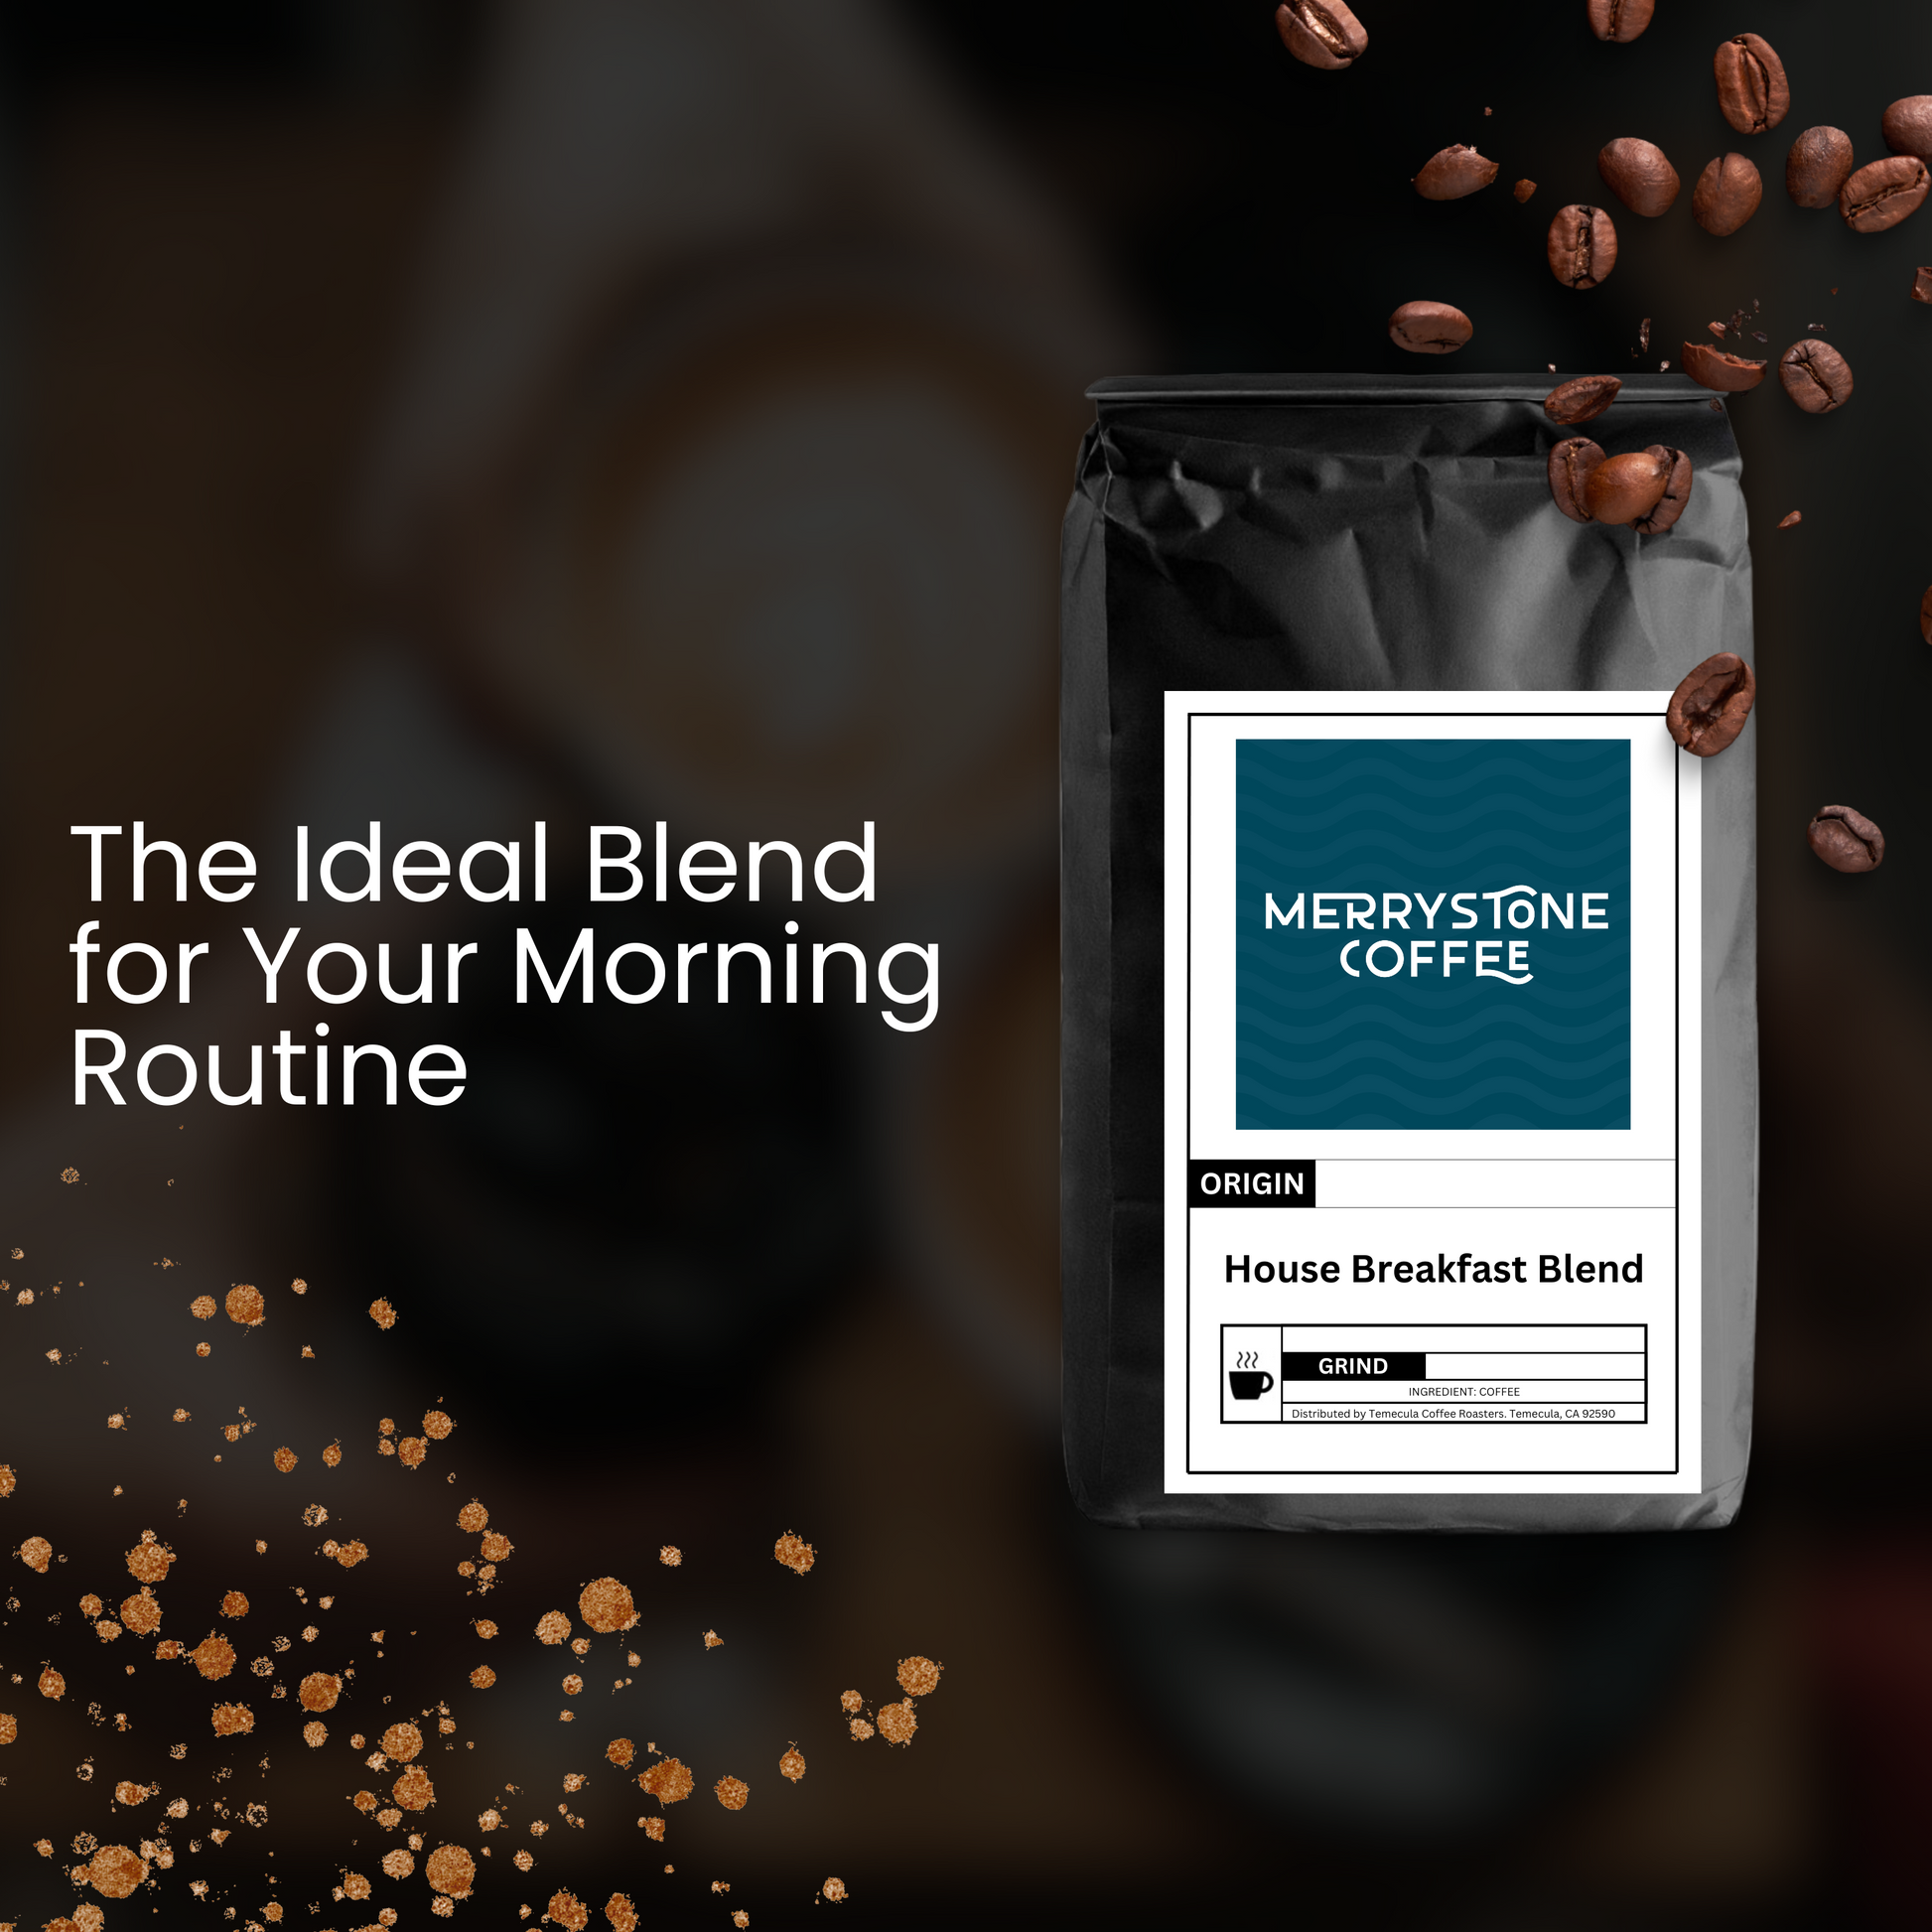 House Breakfast Blend Coffee - Merrystone Coffee